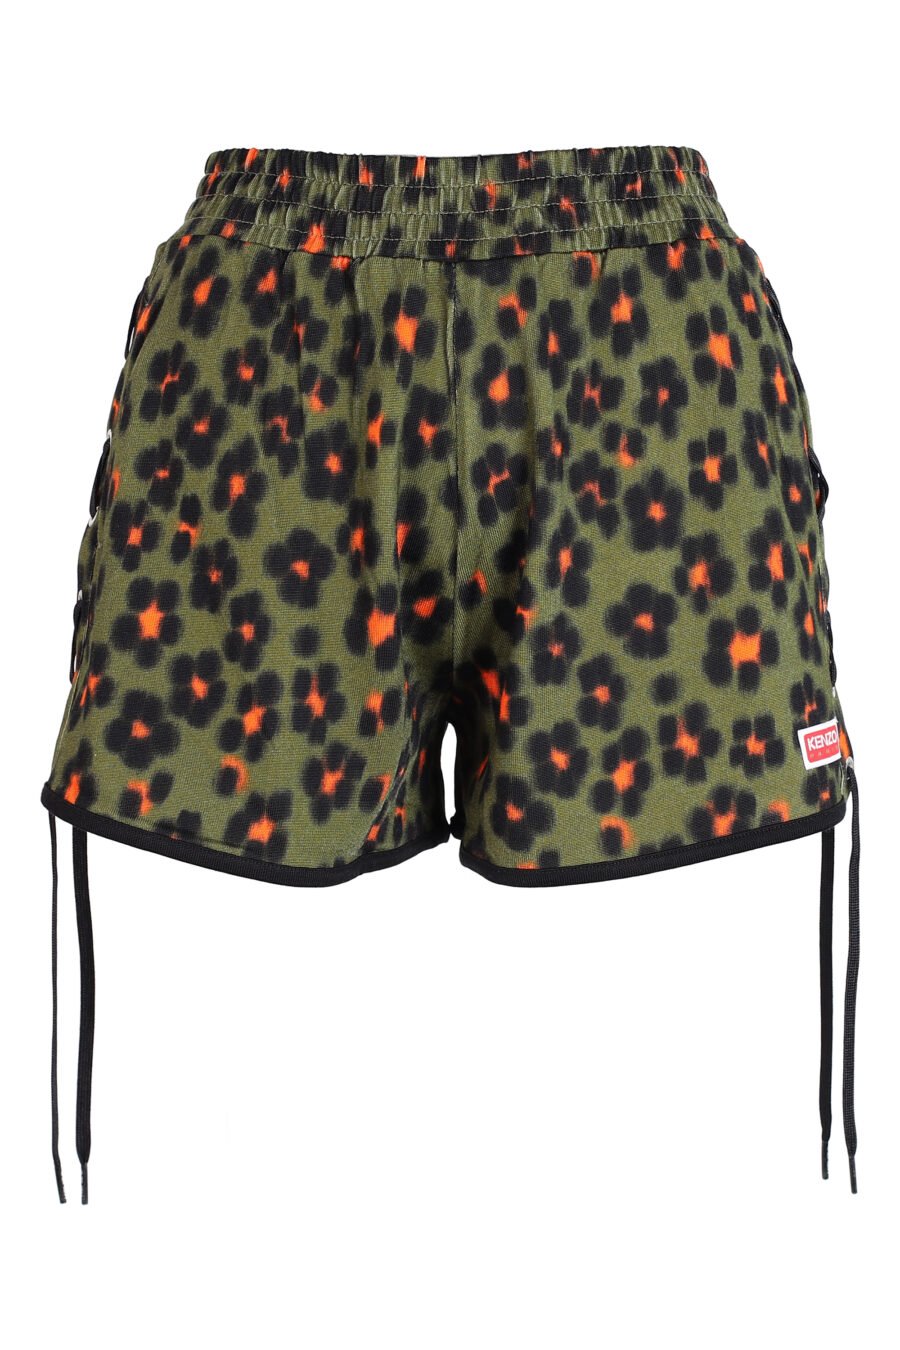 Pantalón corto verde con estampado leopardo naranja - IMG 3292